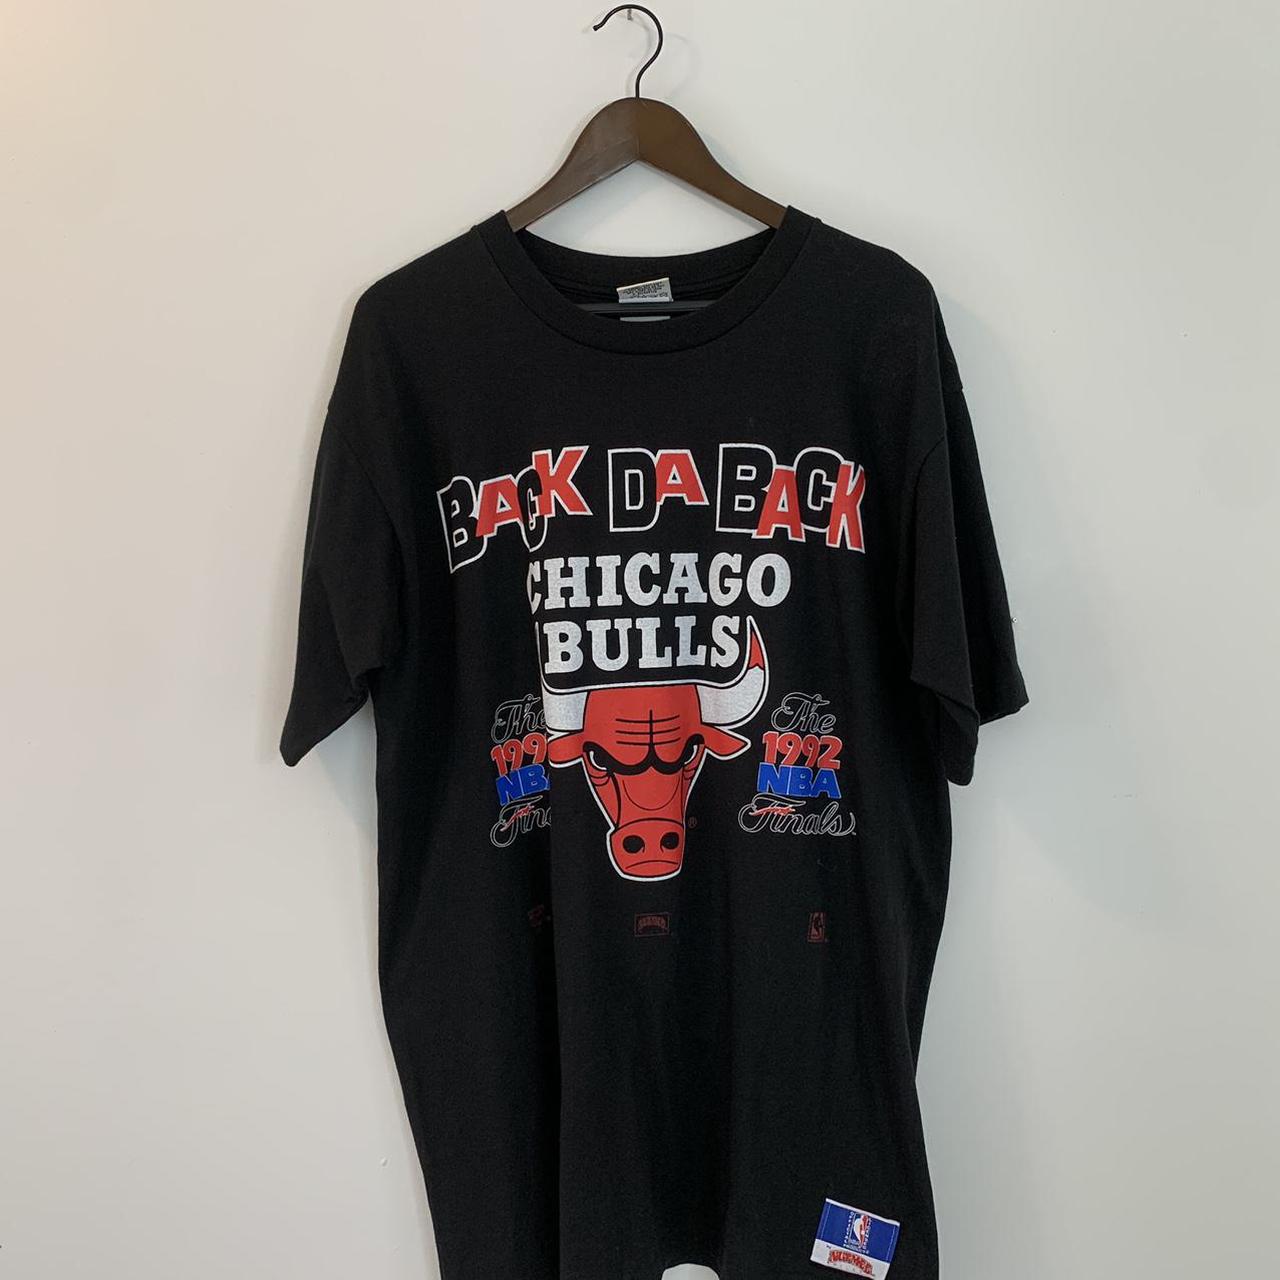 Vintage CHICAGO BULLS T-Shirt 1991 1992 year back 2 back